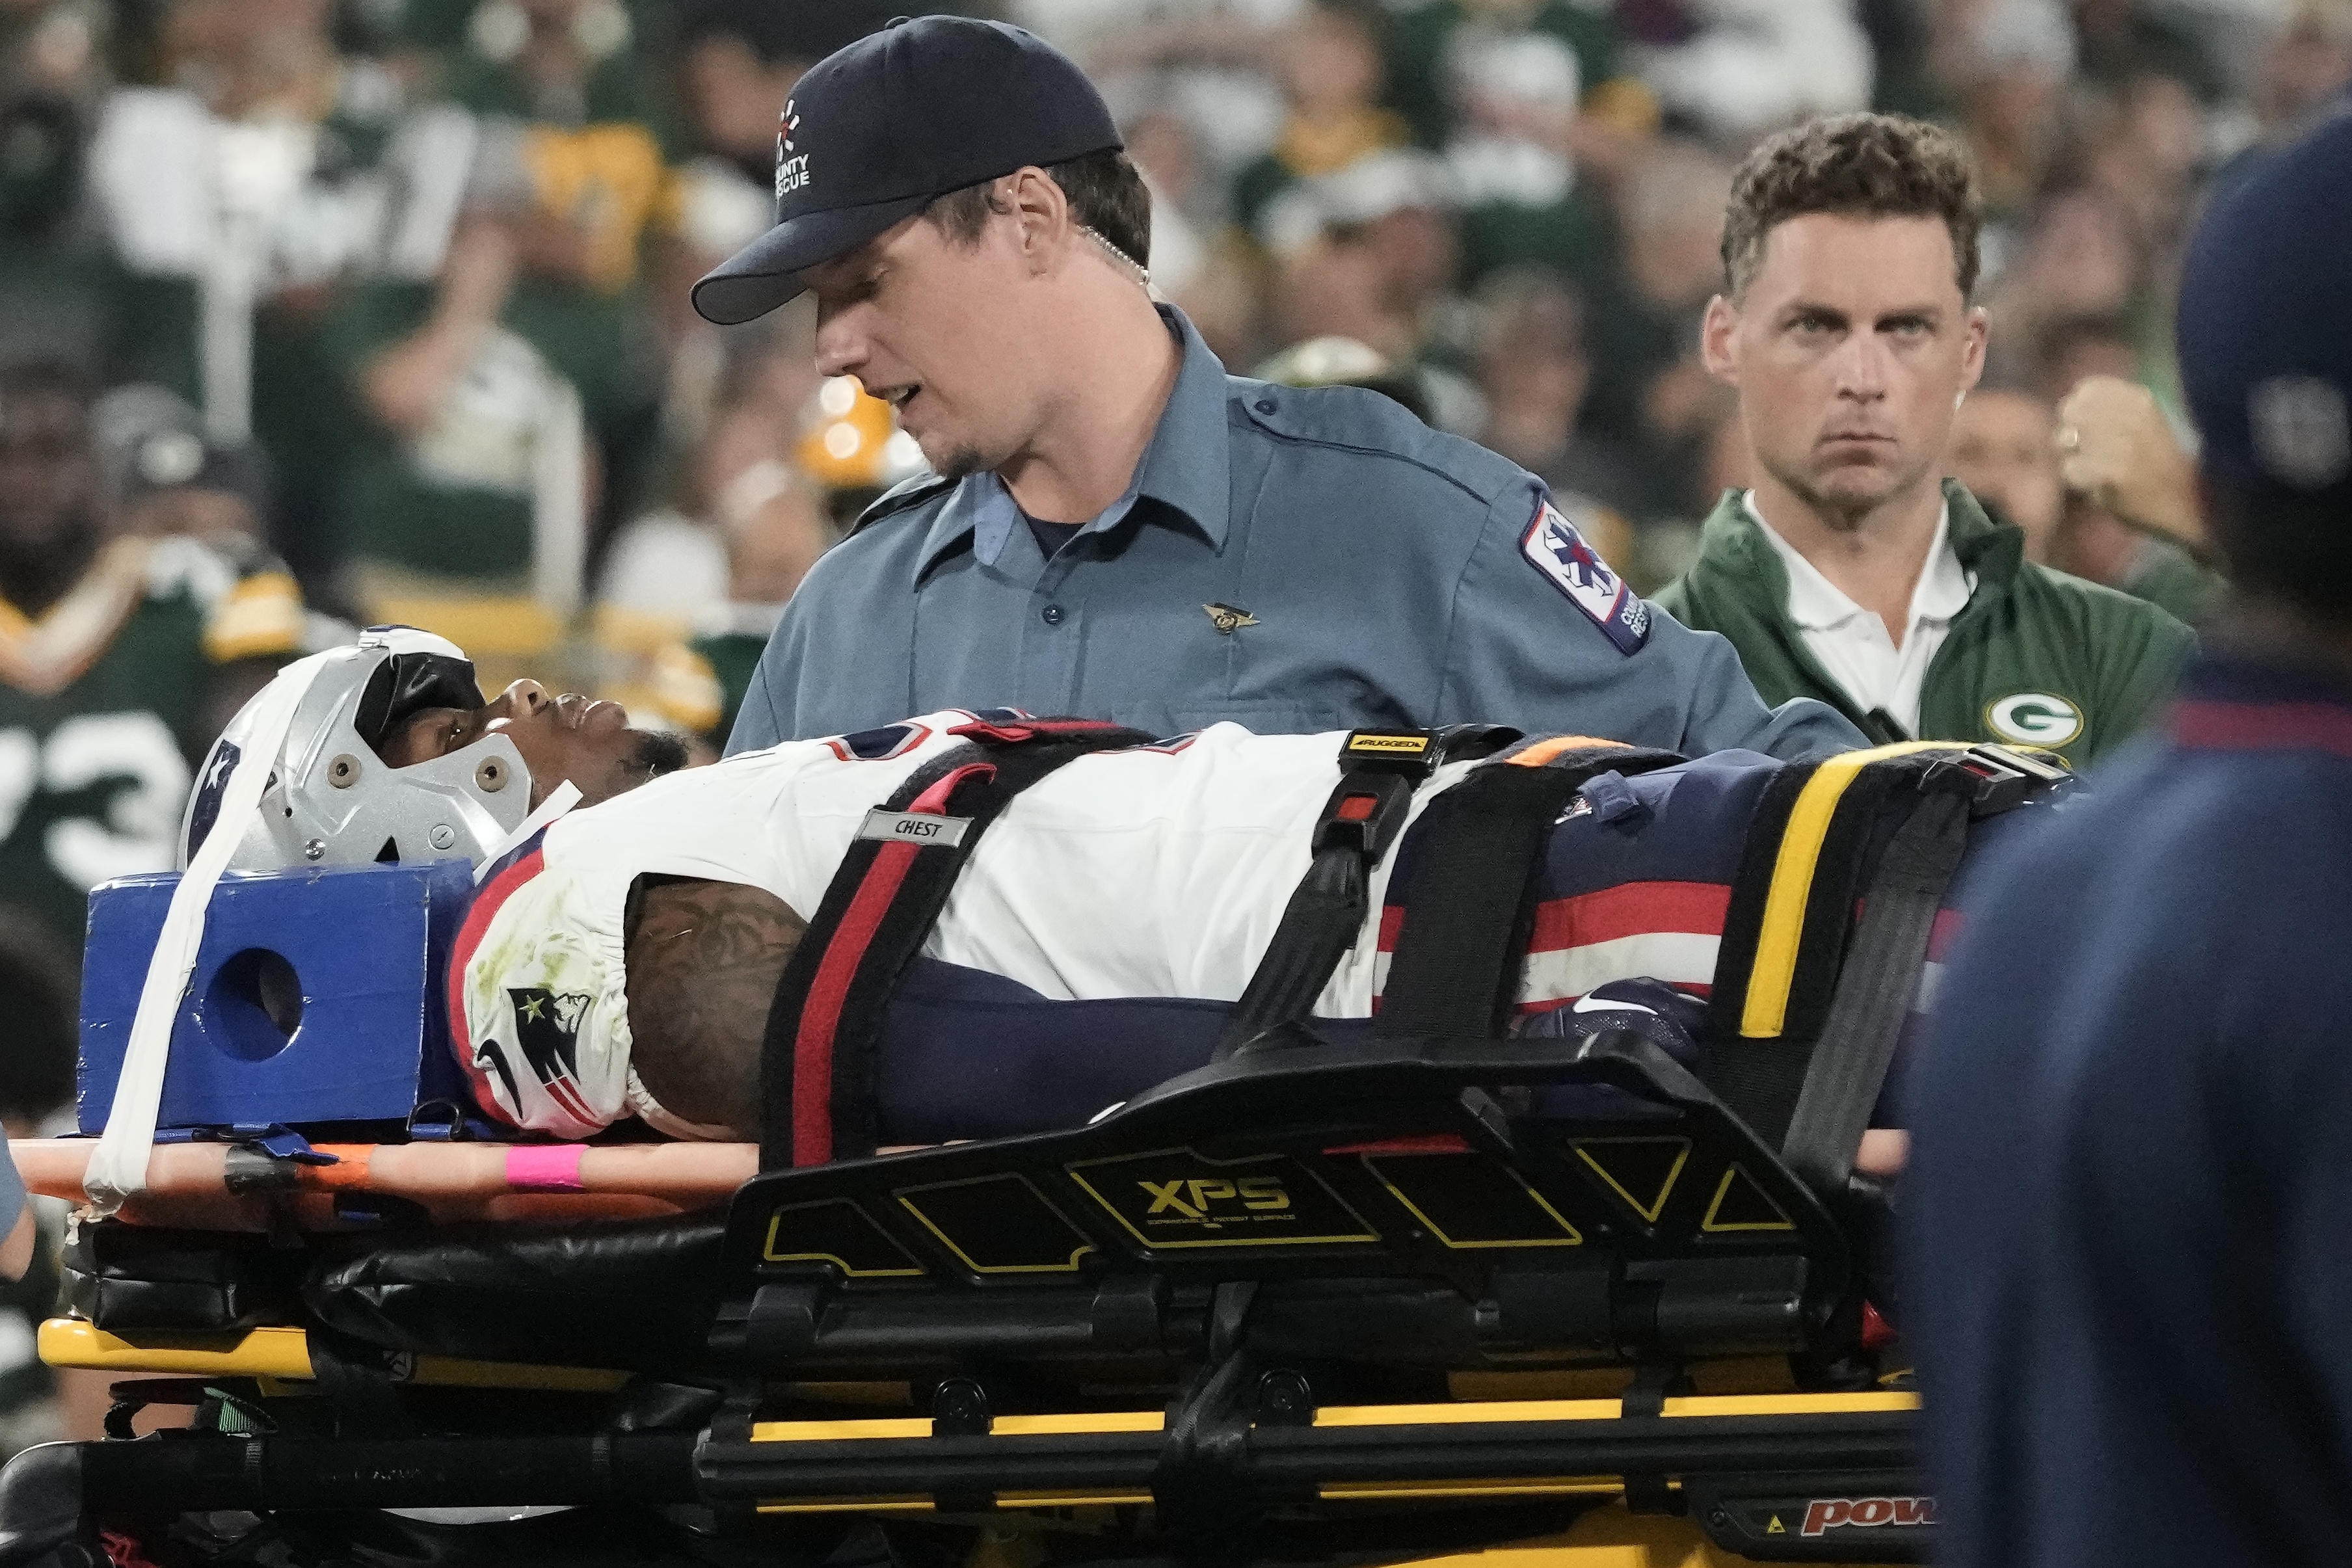 NFL Preseason Game Suspended After Player Injured, Carted Off